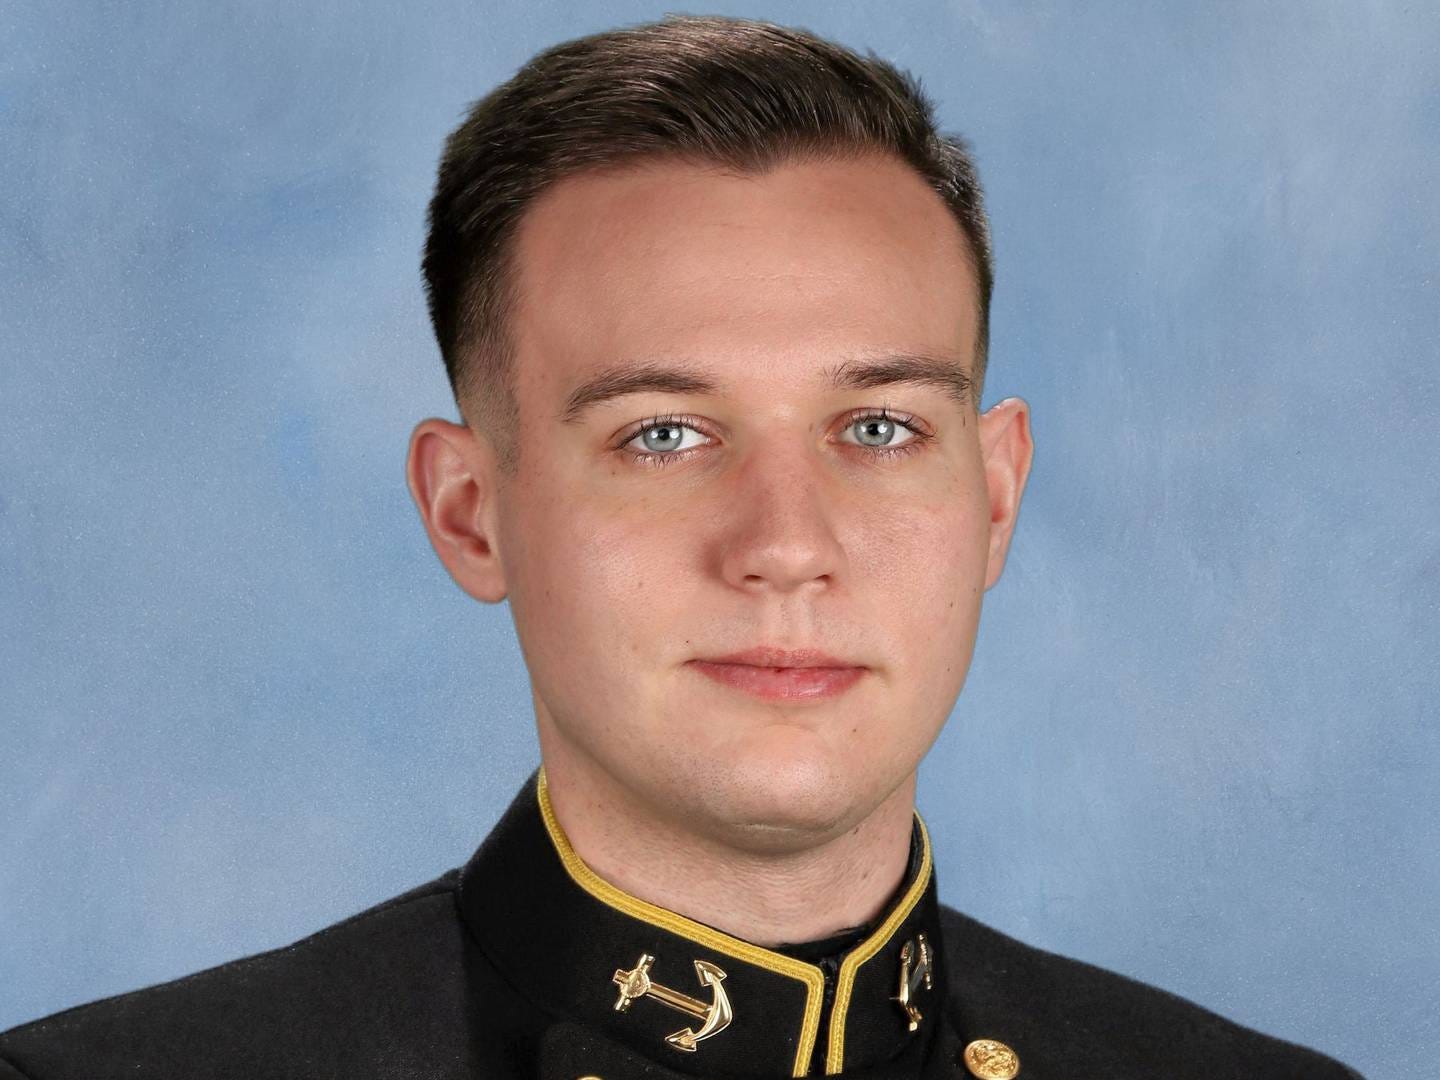 Midshipman Mason Halsey died Monday, the Naval Academy announced.